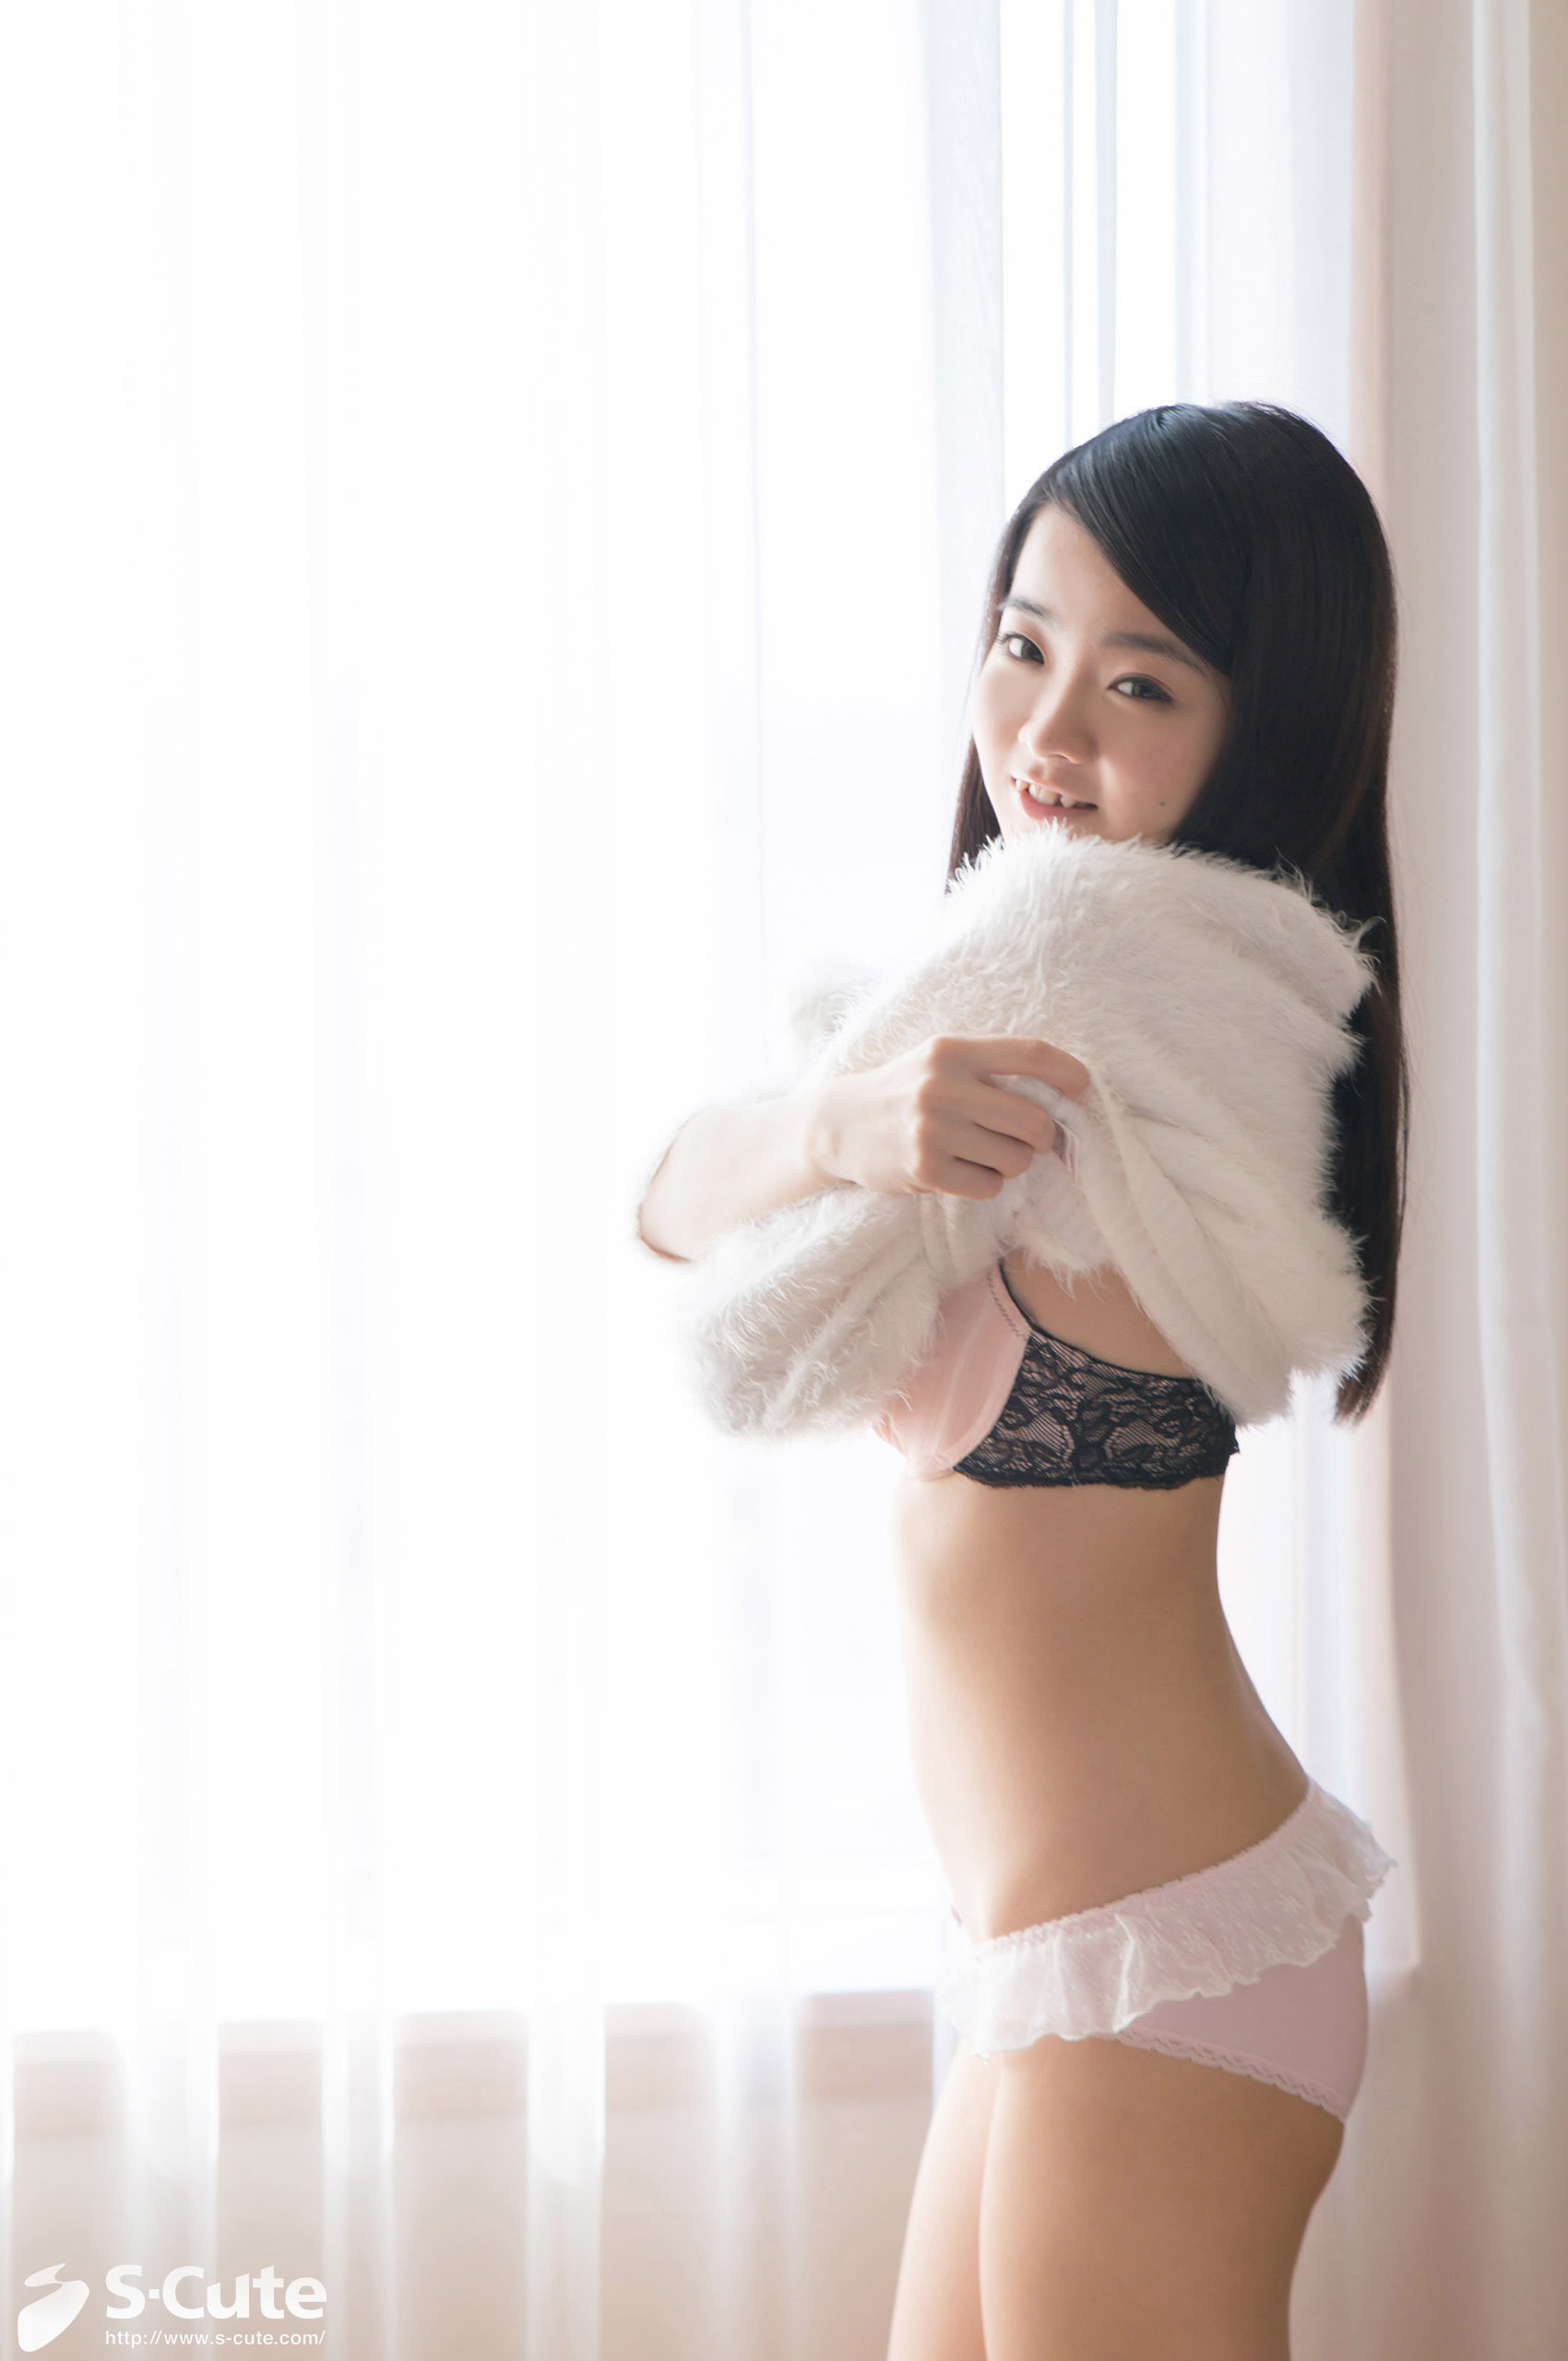 【S-Cute】 #382 Yui （早乙女ゆい） nanairo - Yui #1 恥ずかしがるロリっ娘の背伸びエッチ